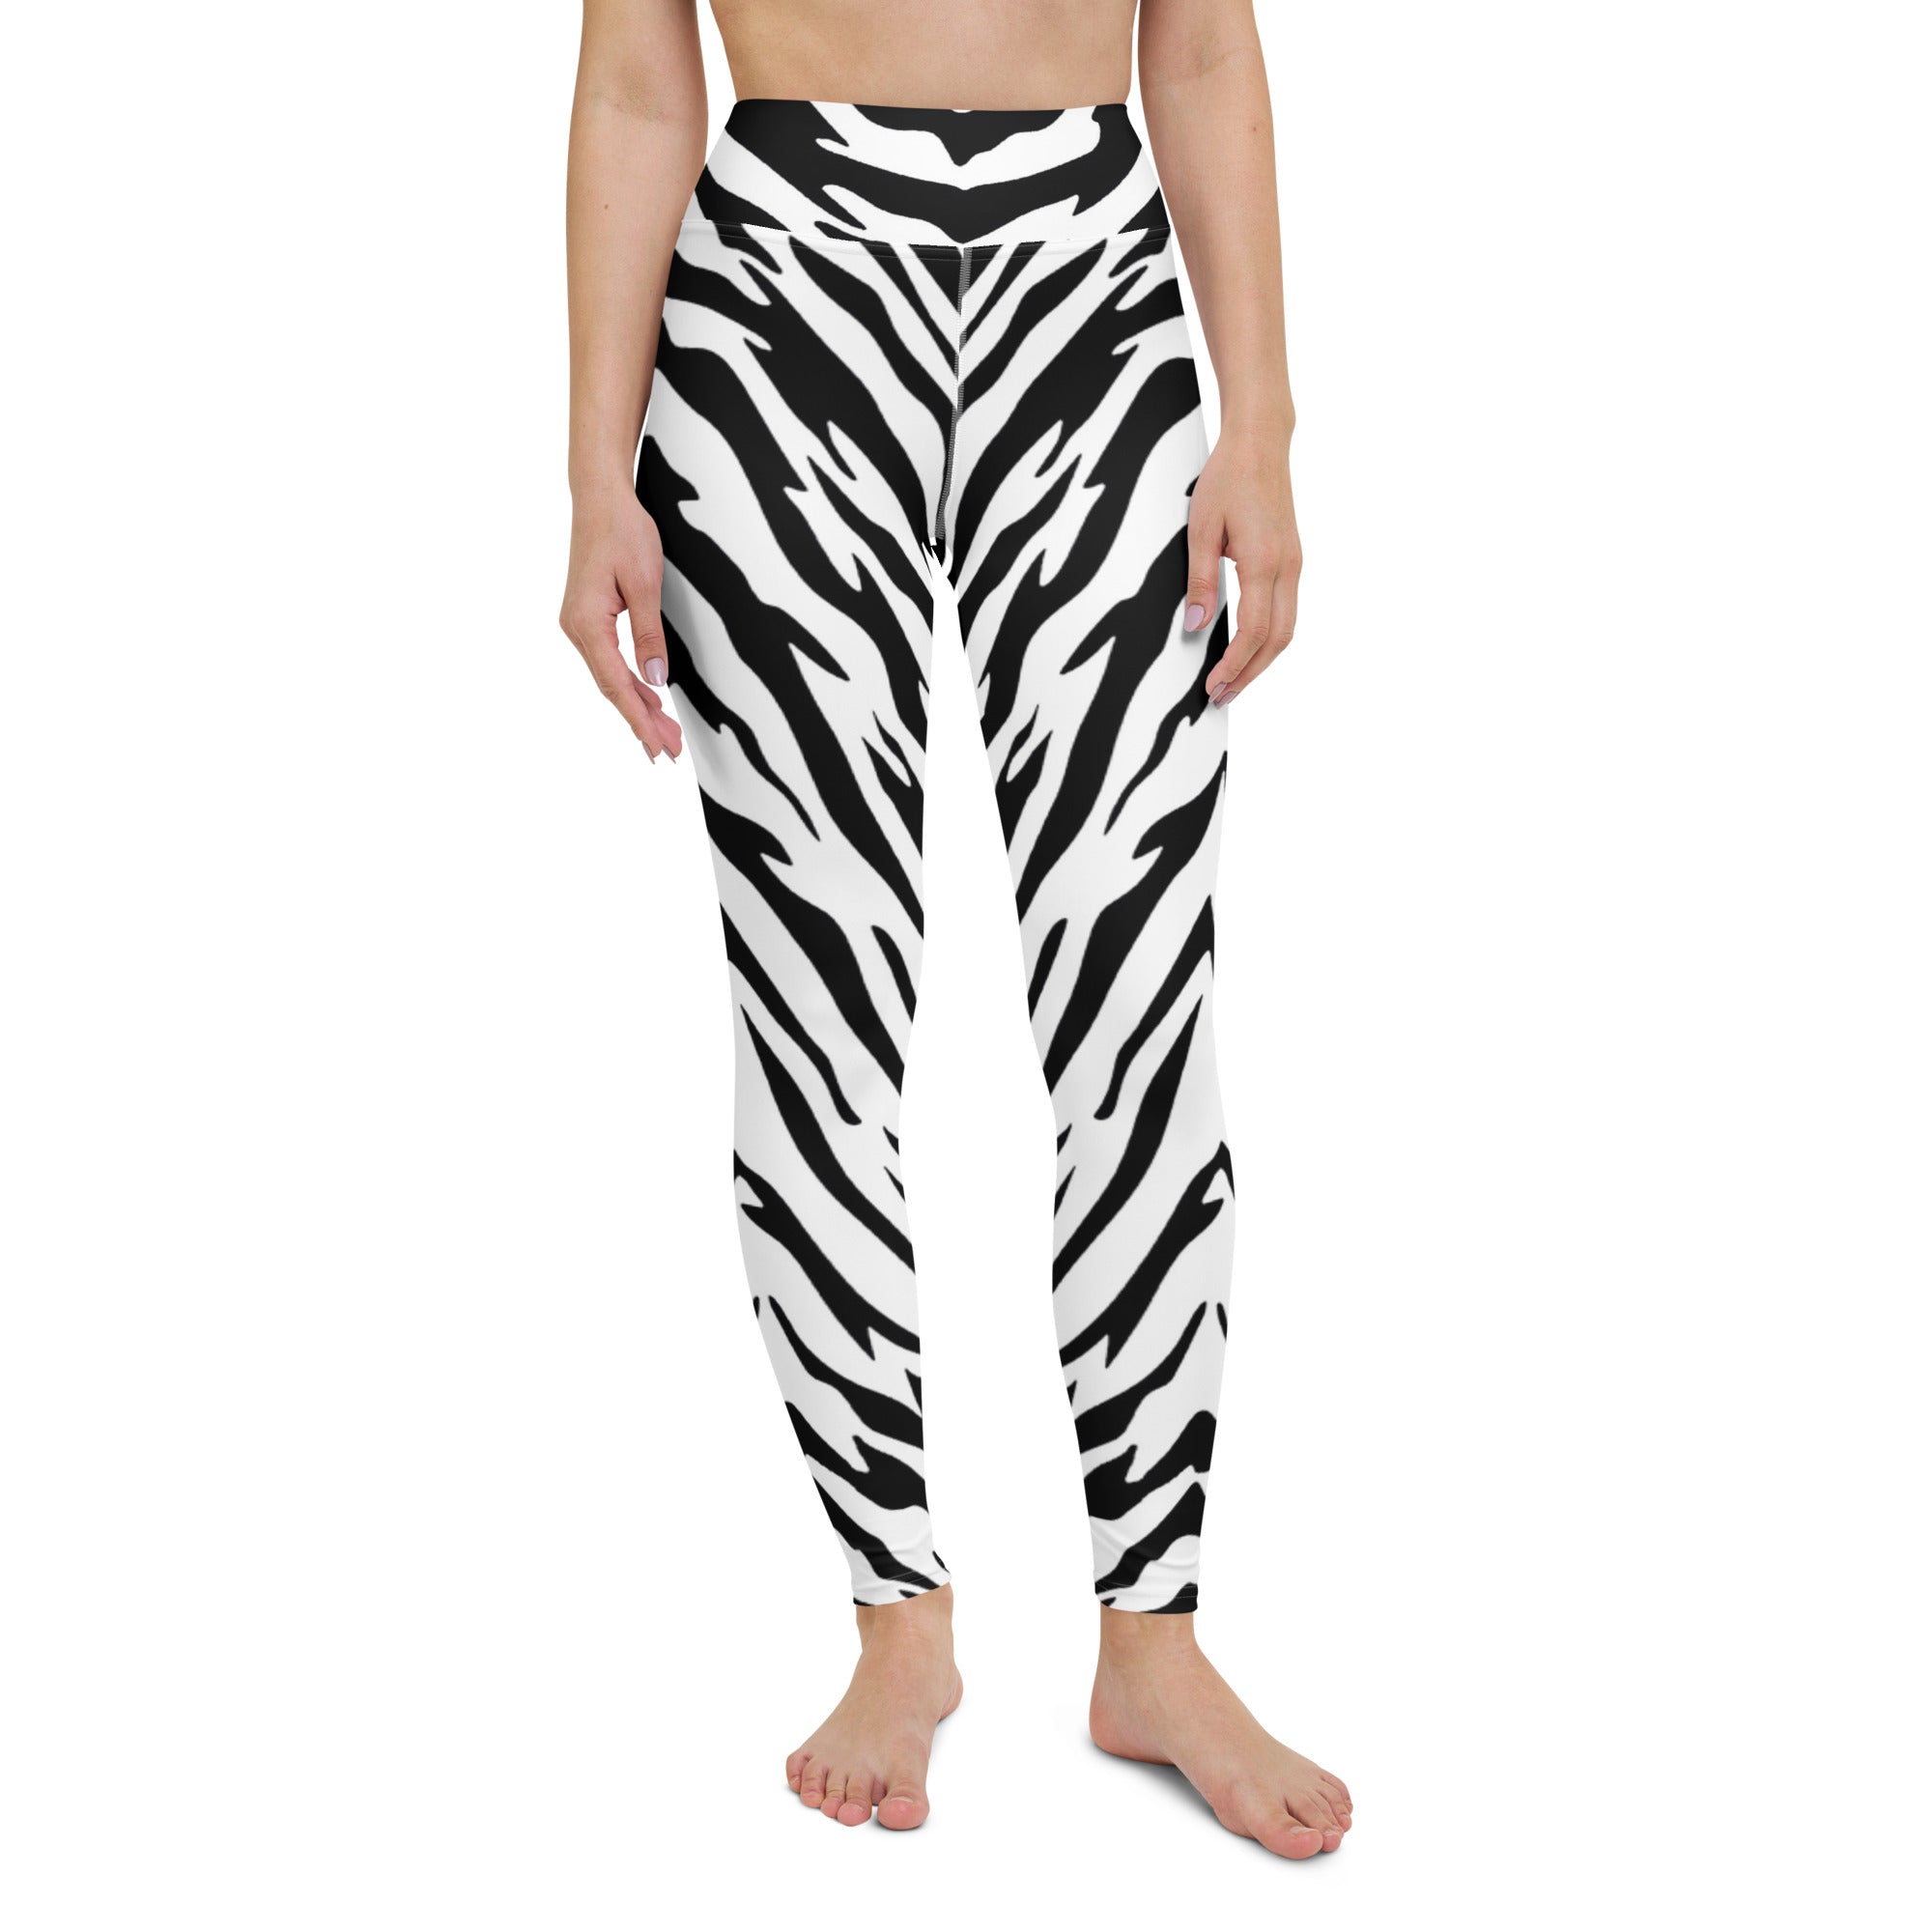 White Tiger Stripe Pattern Yoga Leggings